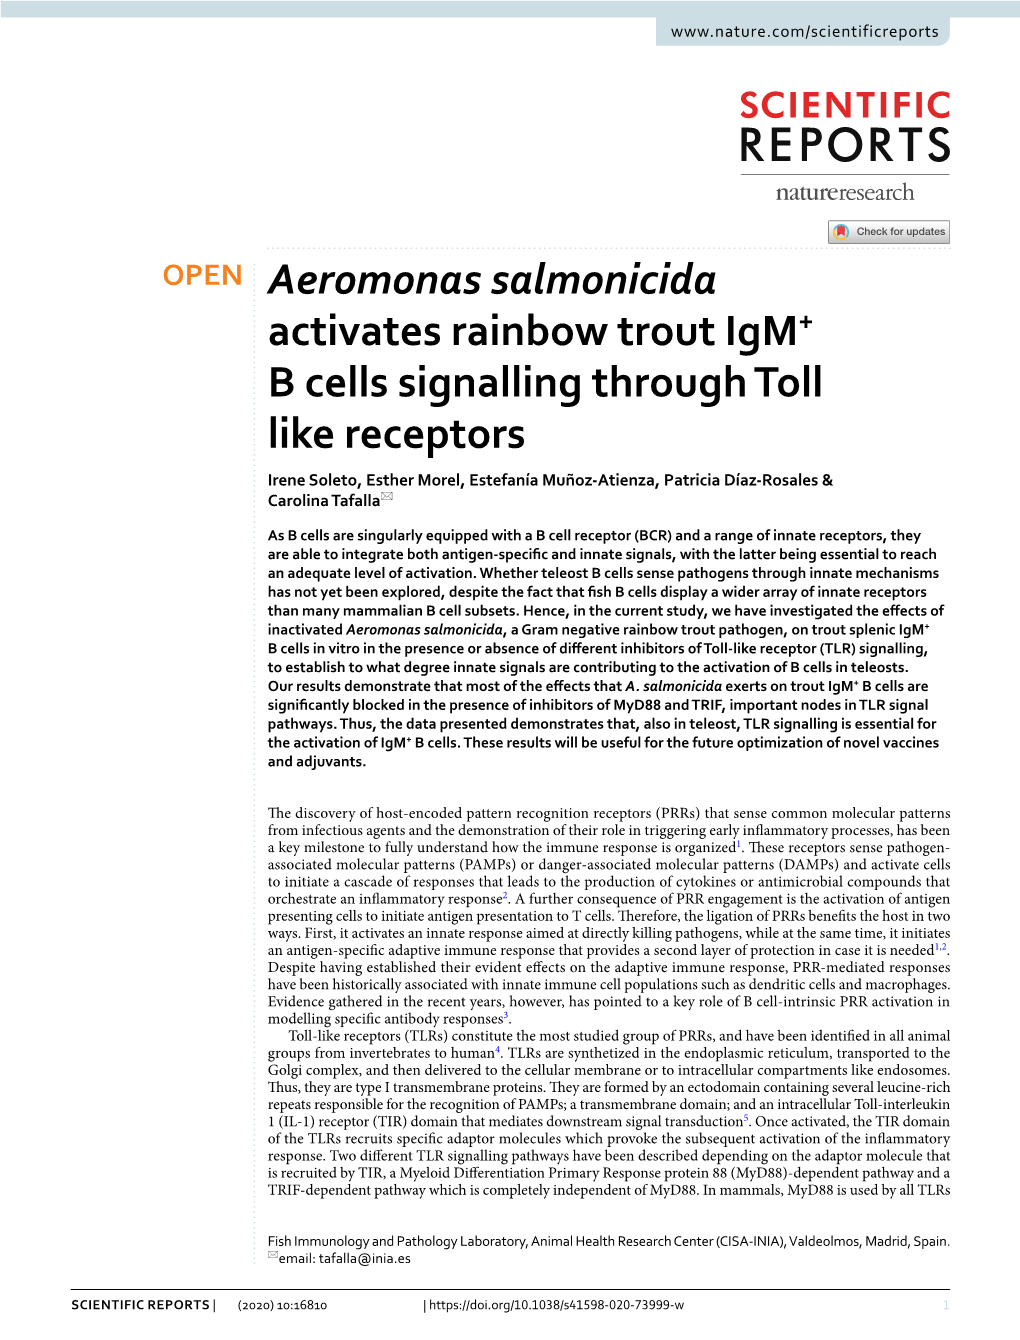 Aeromonas Salmonicida Activates Rainbow Trout Igm+ B Cells